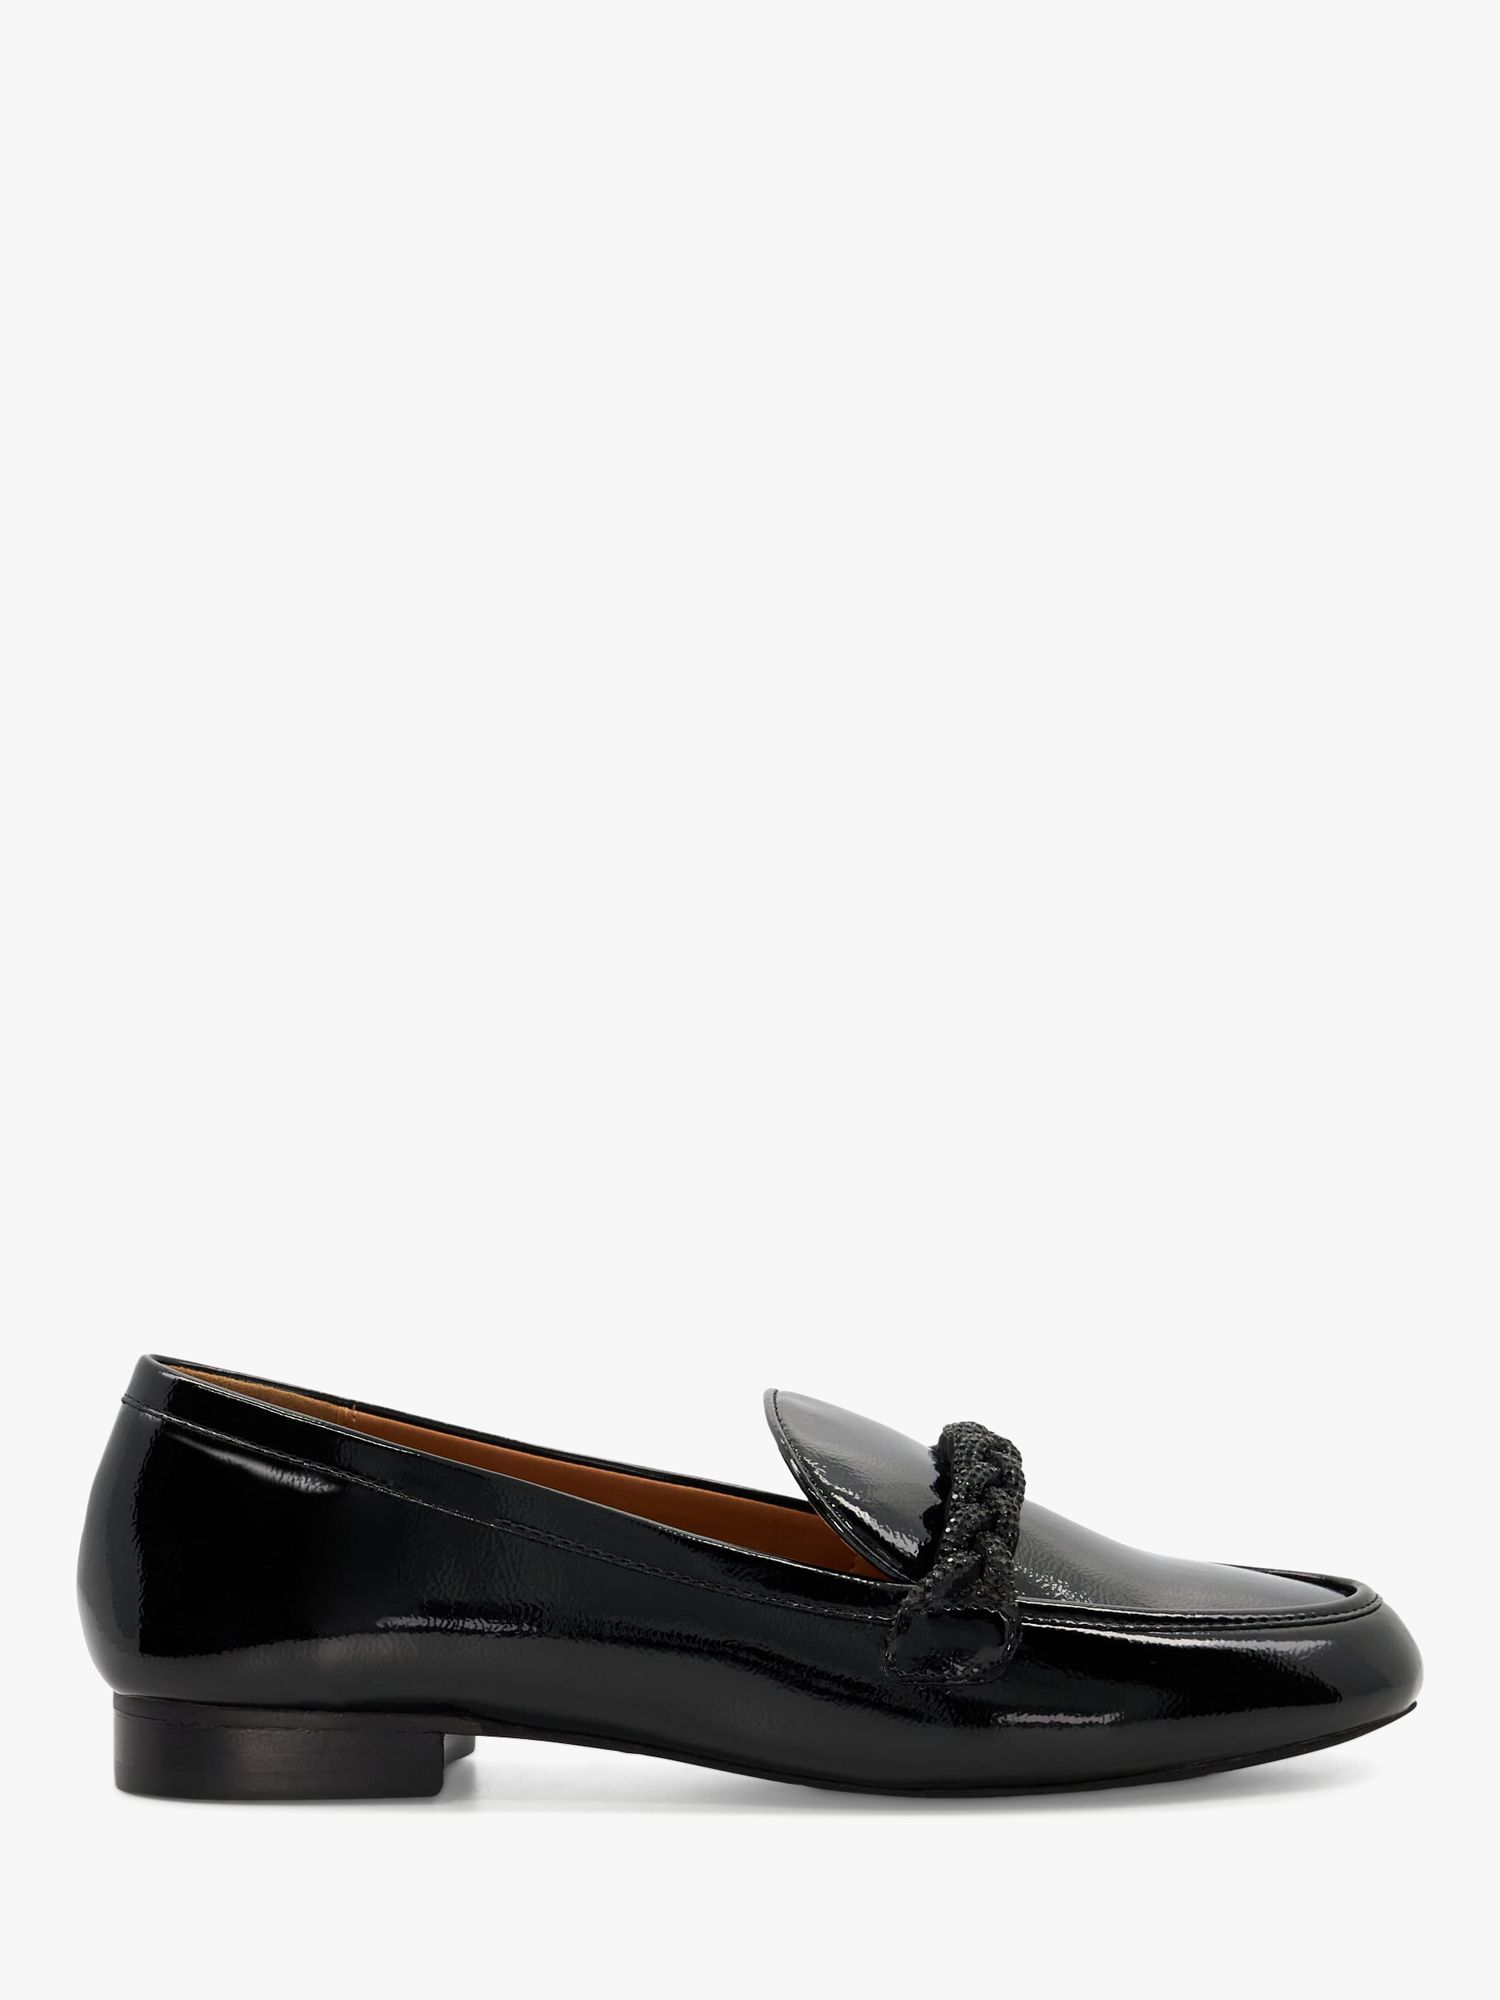 Dune Giuliettas Patent Loafers, Black at John Lewis & Partners